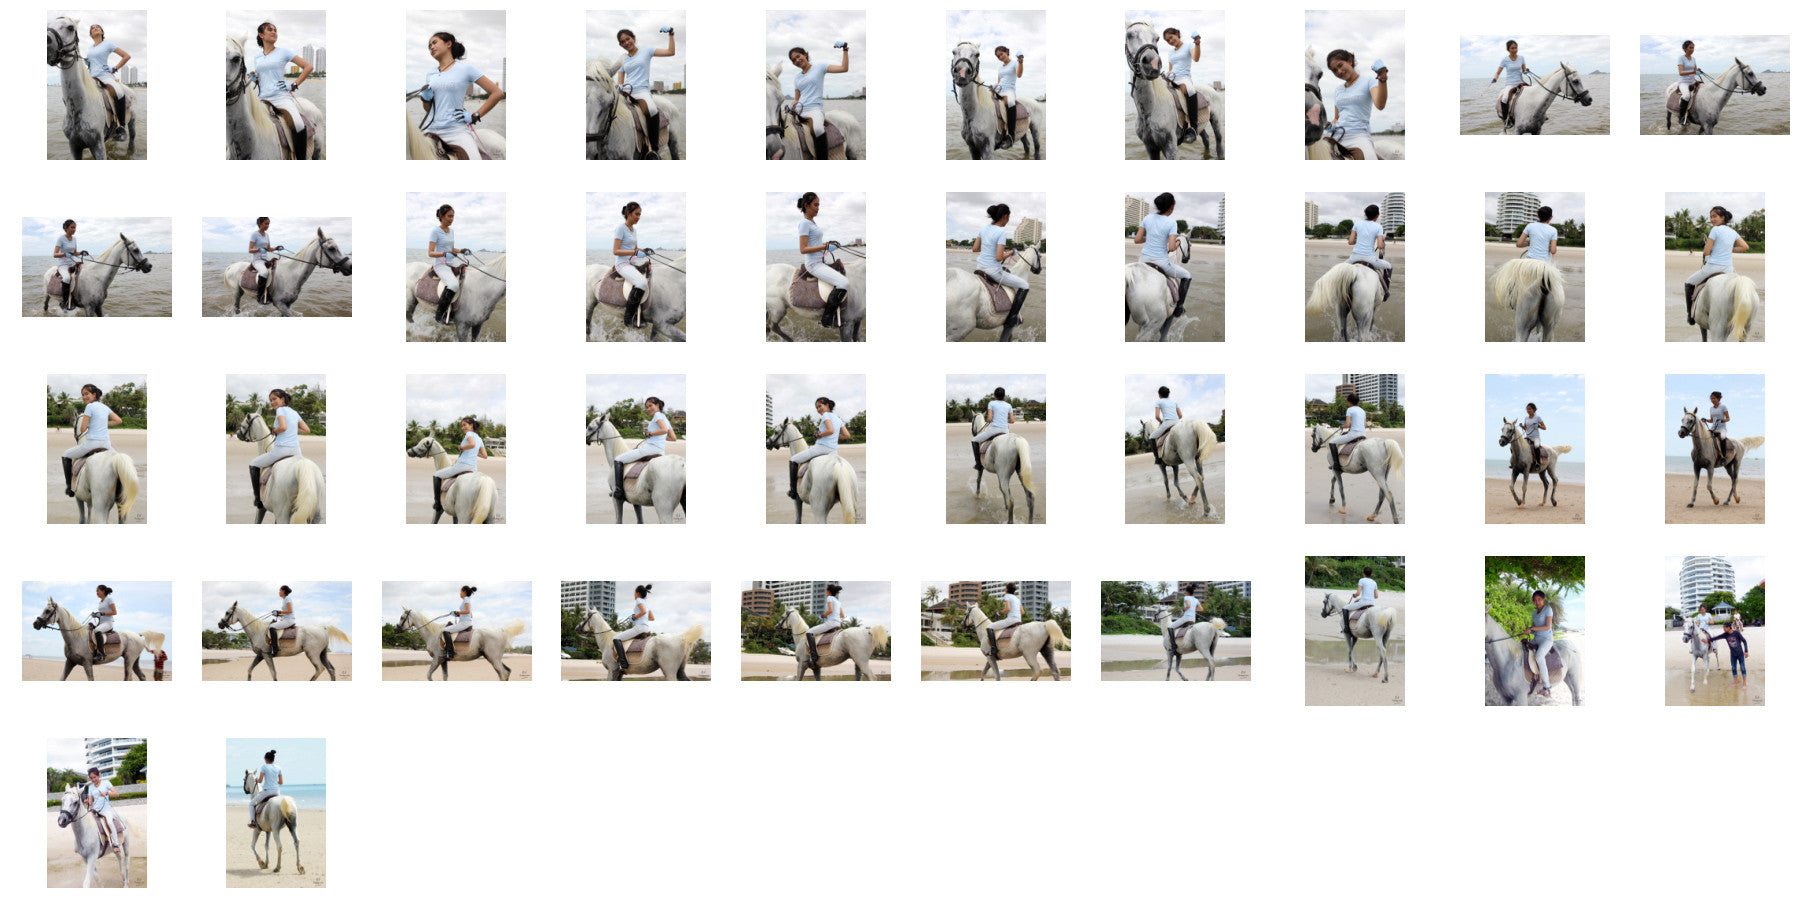 Som in Jodhpurs Riding with Saddle on White Arabian Horse, Part 5 - Riding.Vision